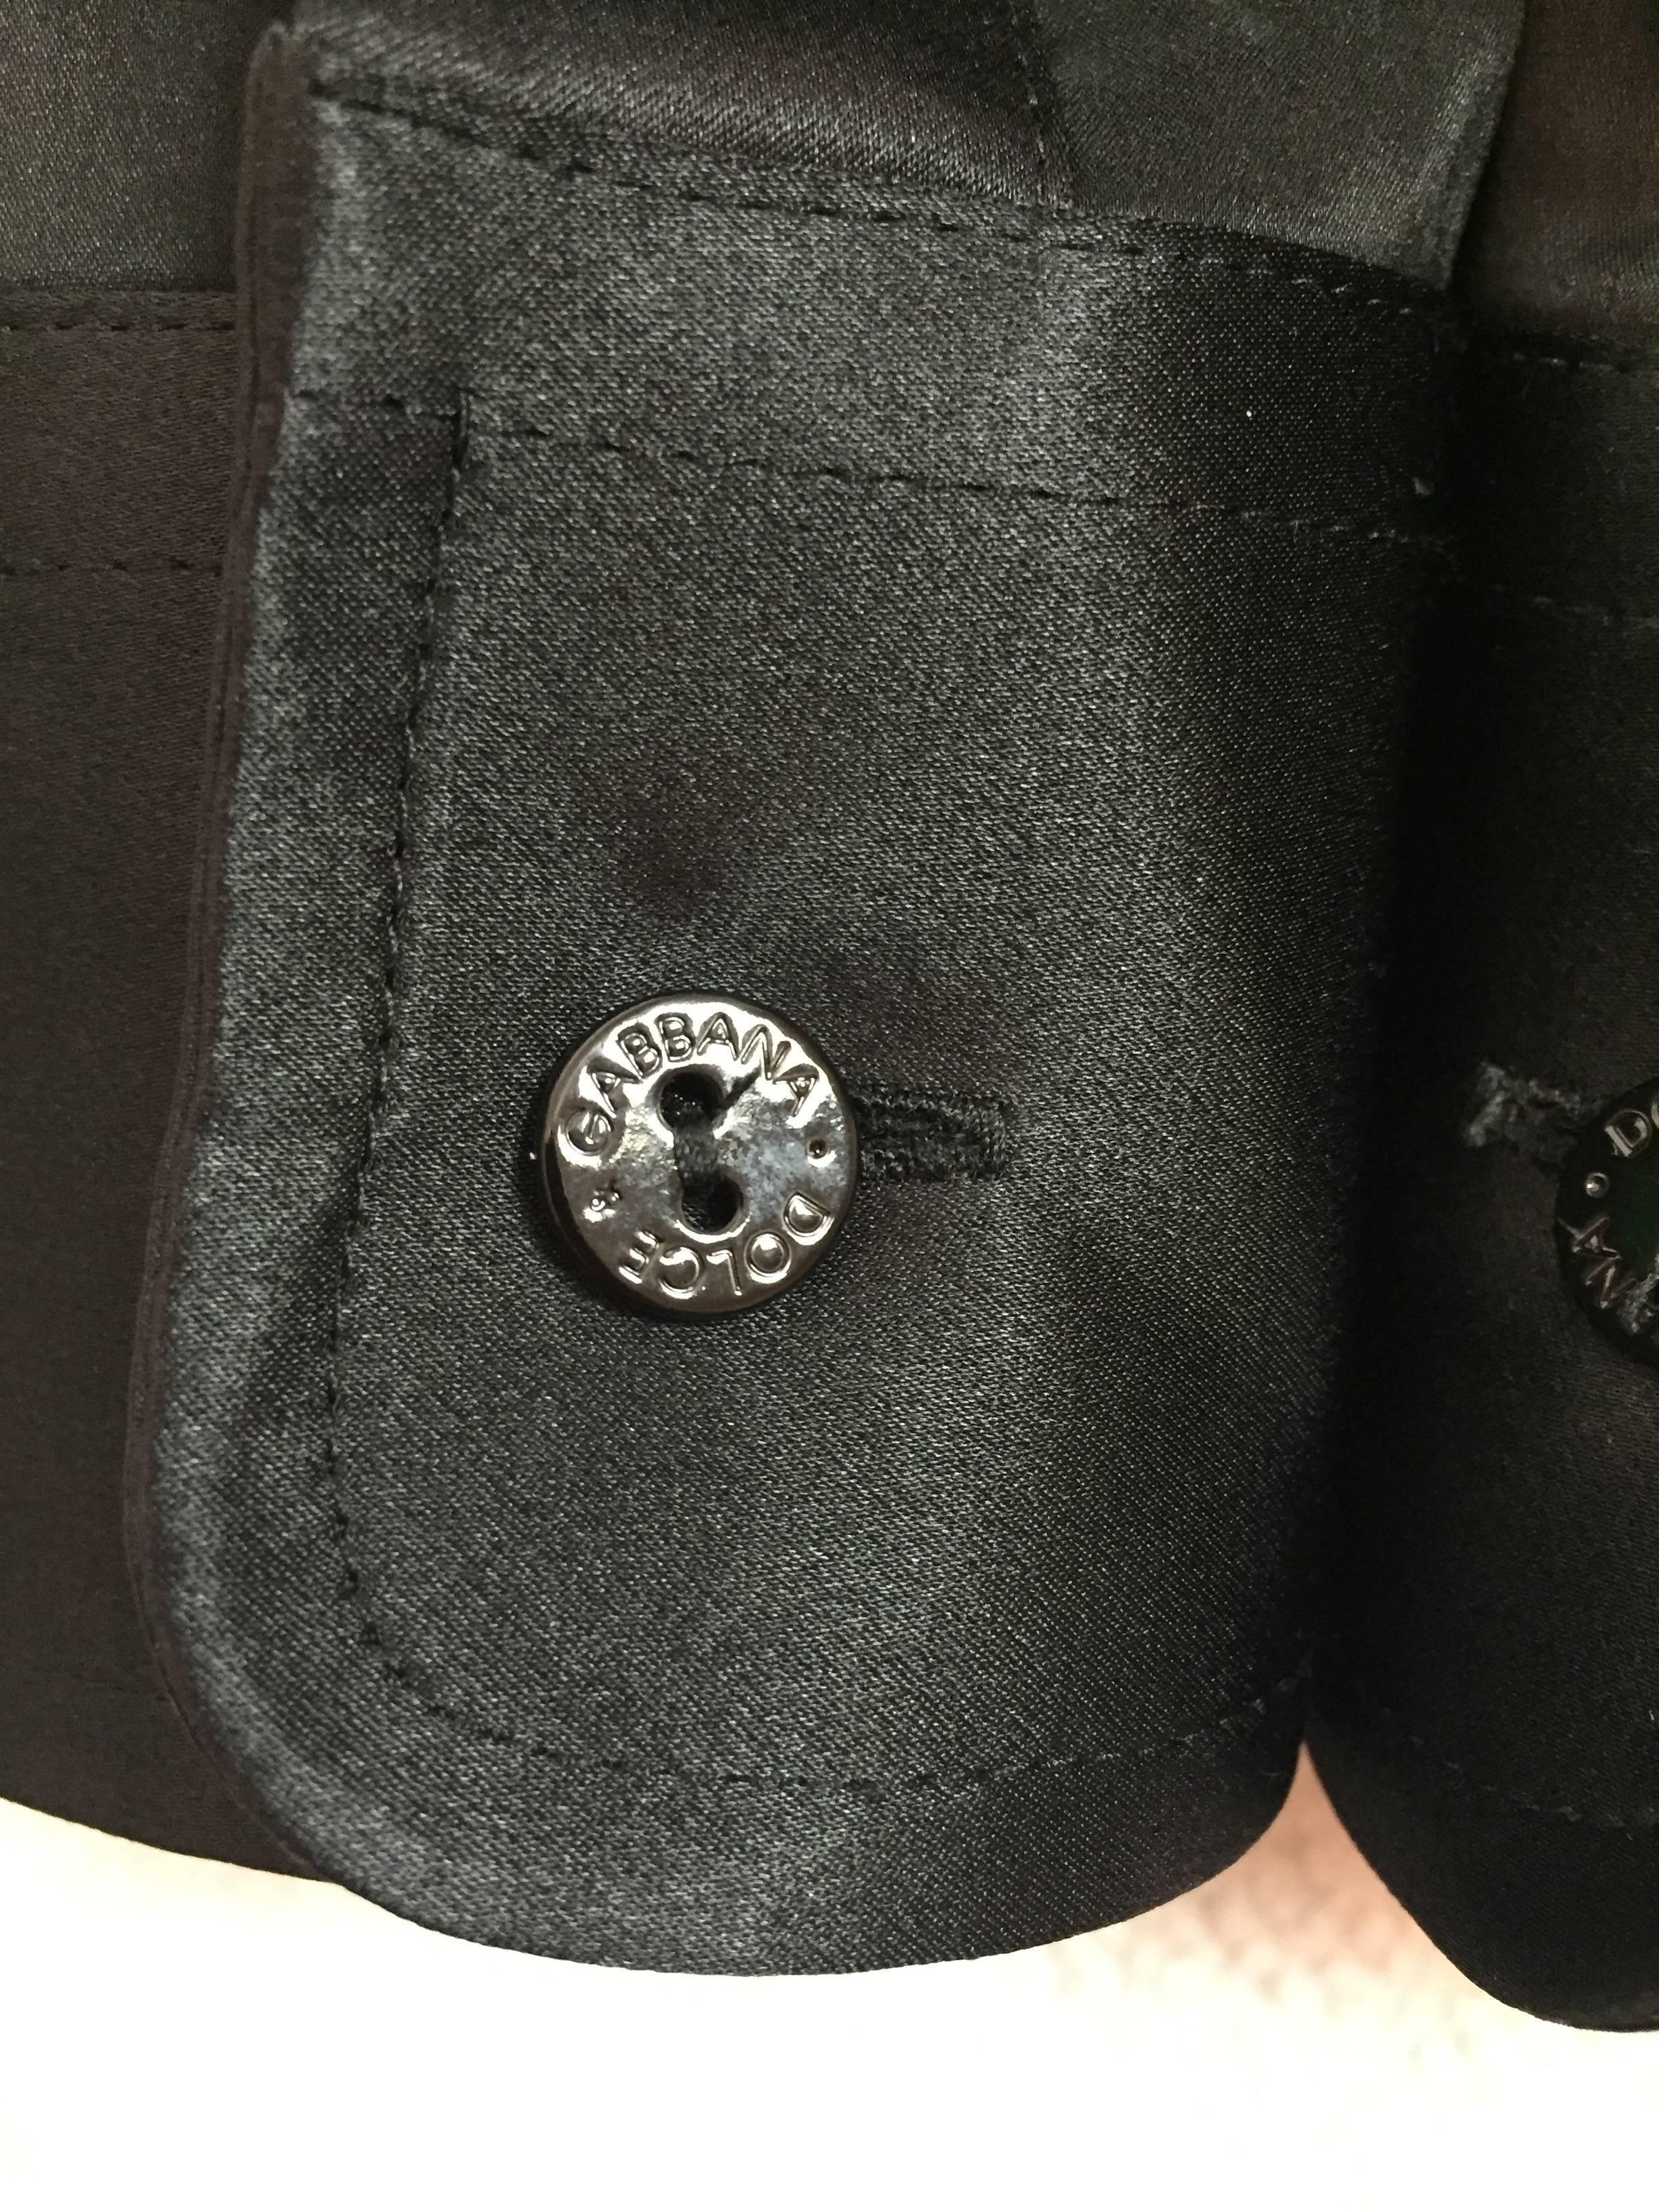 S/S 2000 Dolce & Gabbana Sheer Black Button Down Tunic Dress Blouse 3